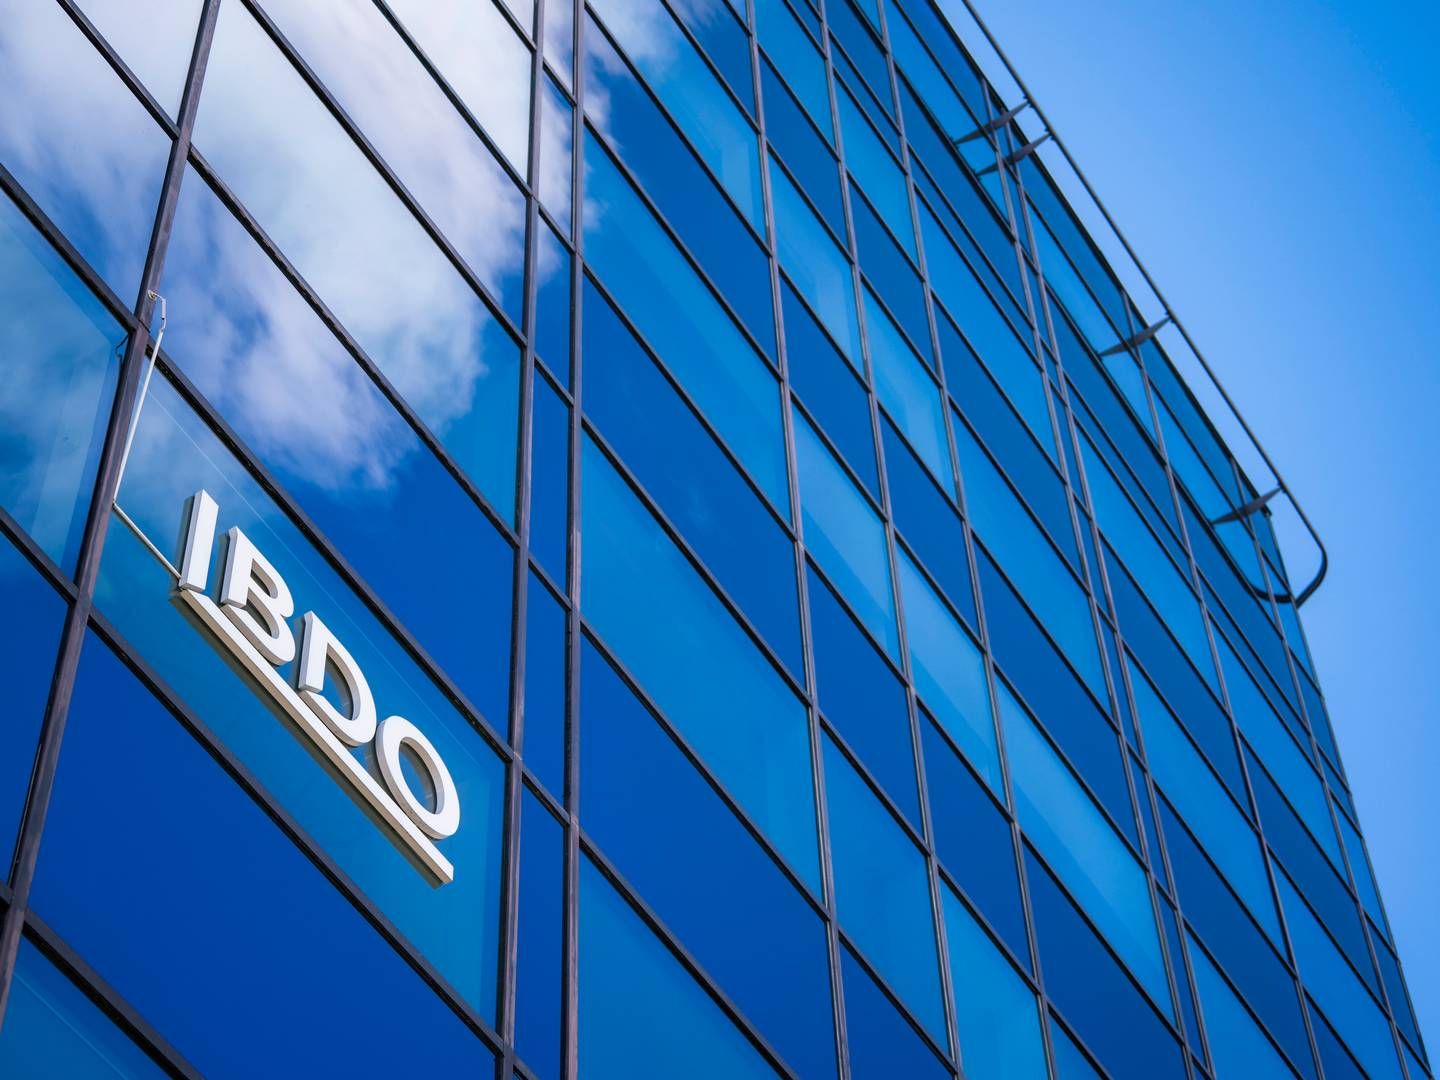 HOVEDKONTOR: BDOs hovedkontor ligger i Munkedamsveien i Oslo. | Foto: Håkon Mosvold Larsen/NTB